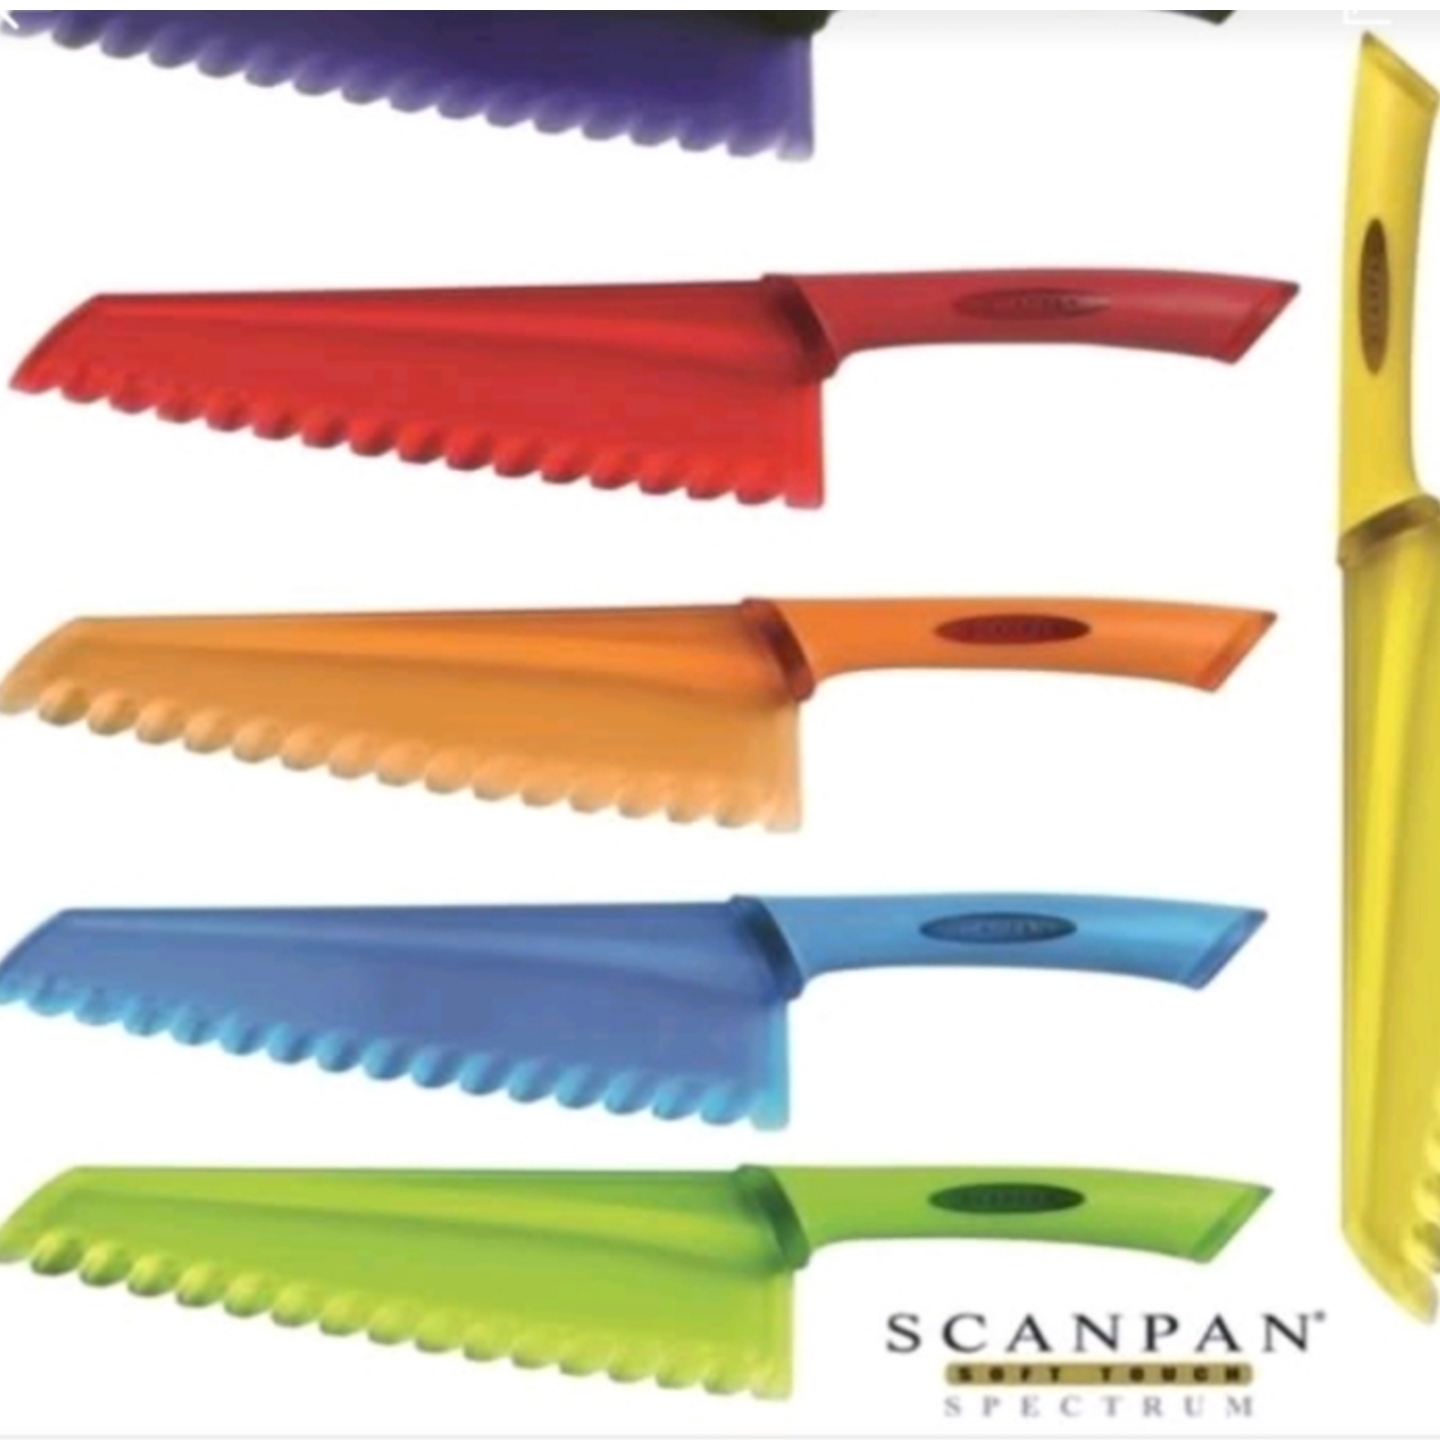 Scanpan salad and vegetables knife 